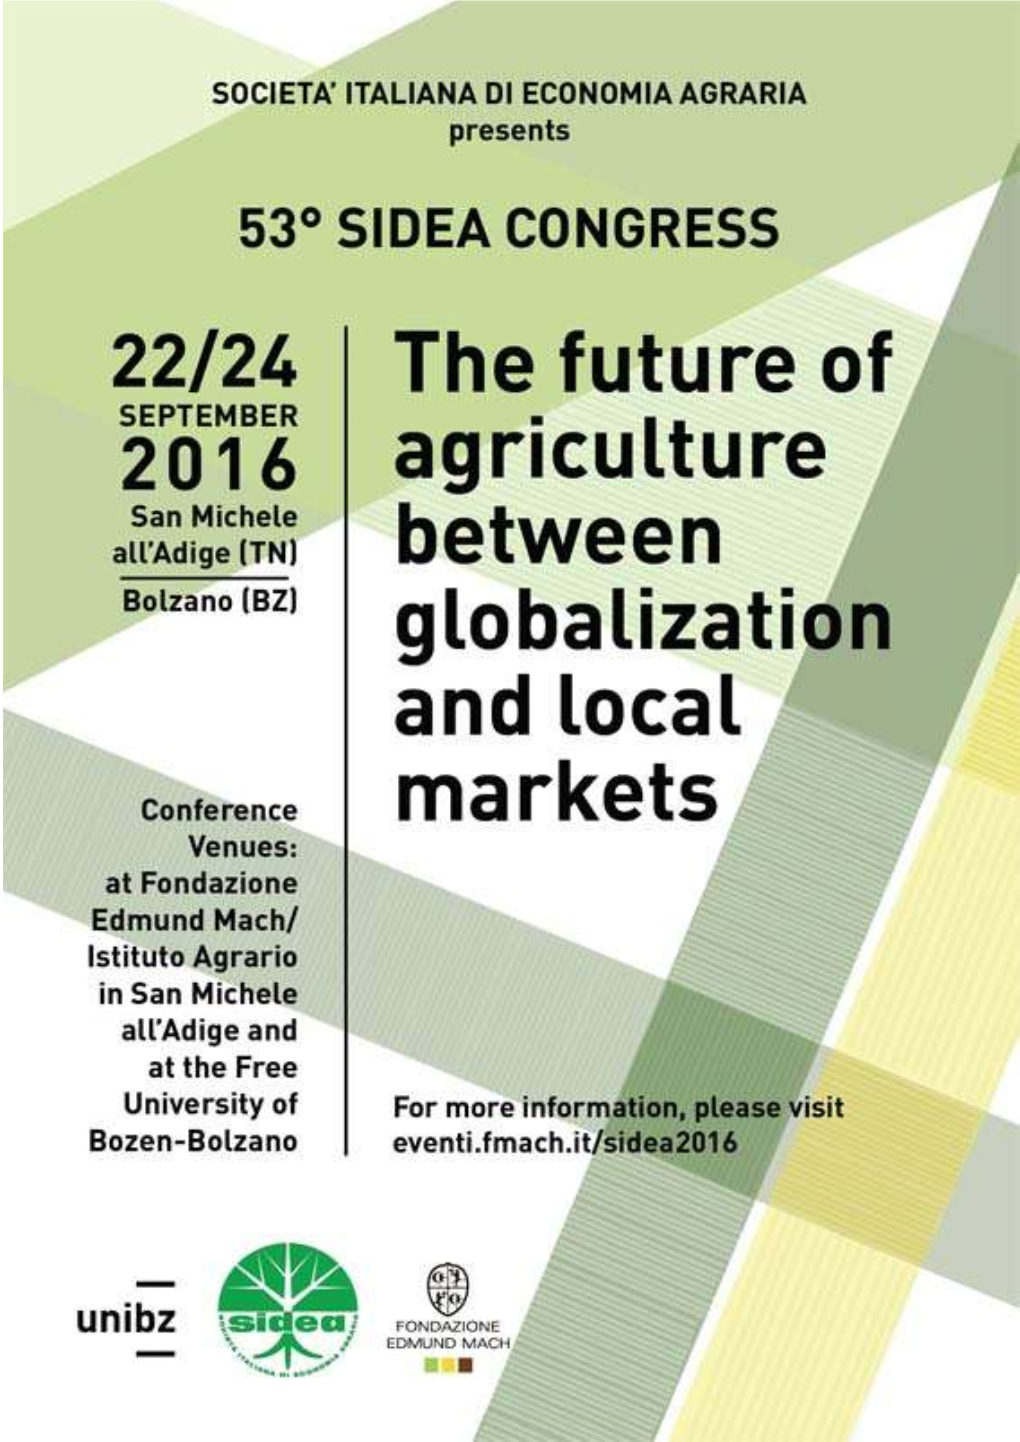 SOCIETÀ ITALIANA DI ECONOMIA AGRARIA the Future of Agriculture Between Globalization and Local Markets